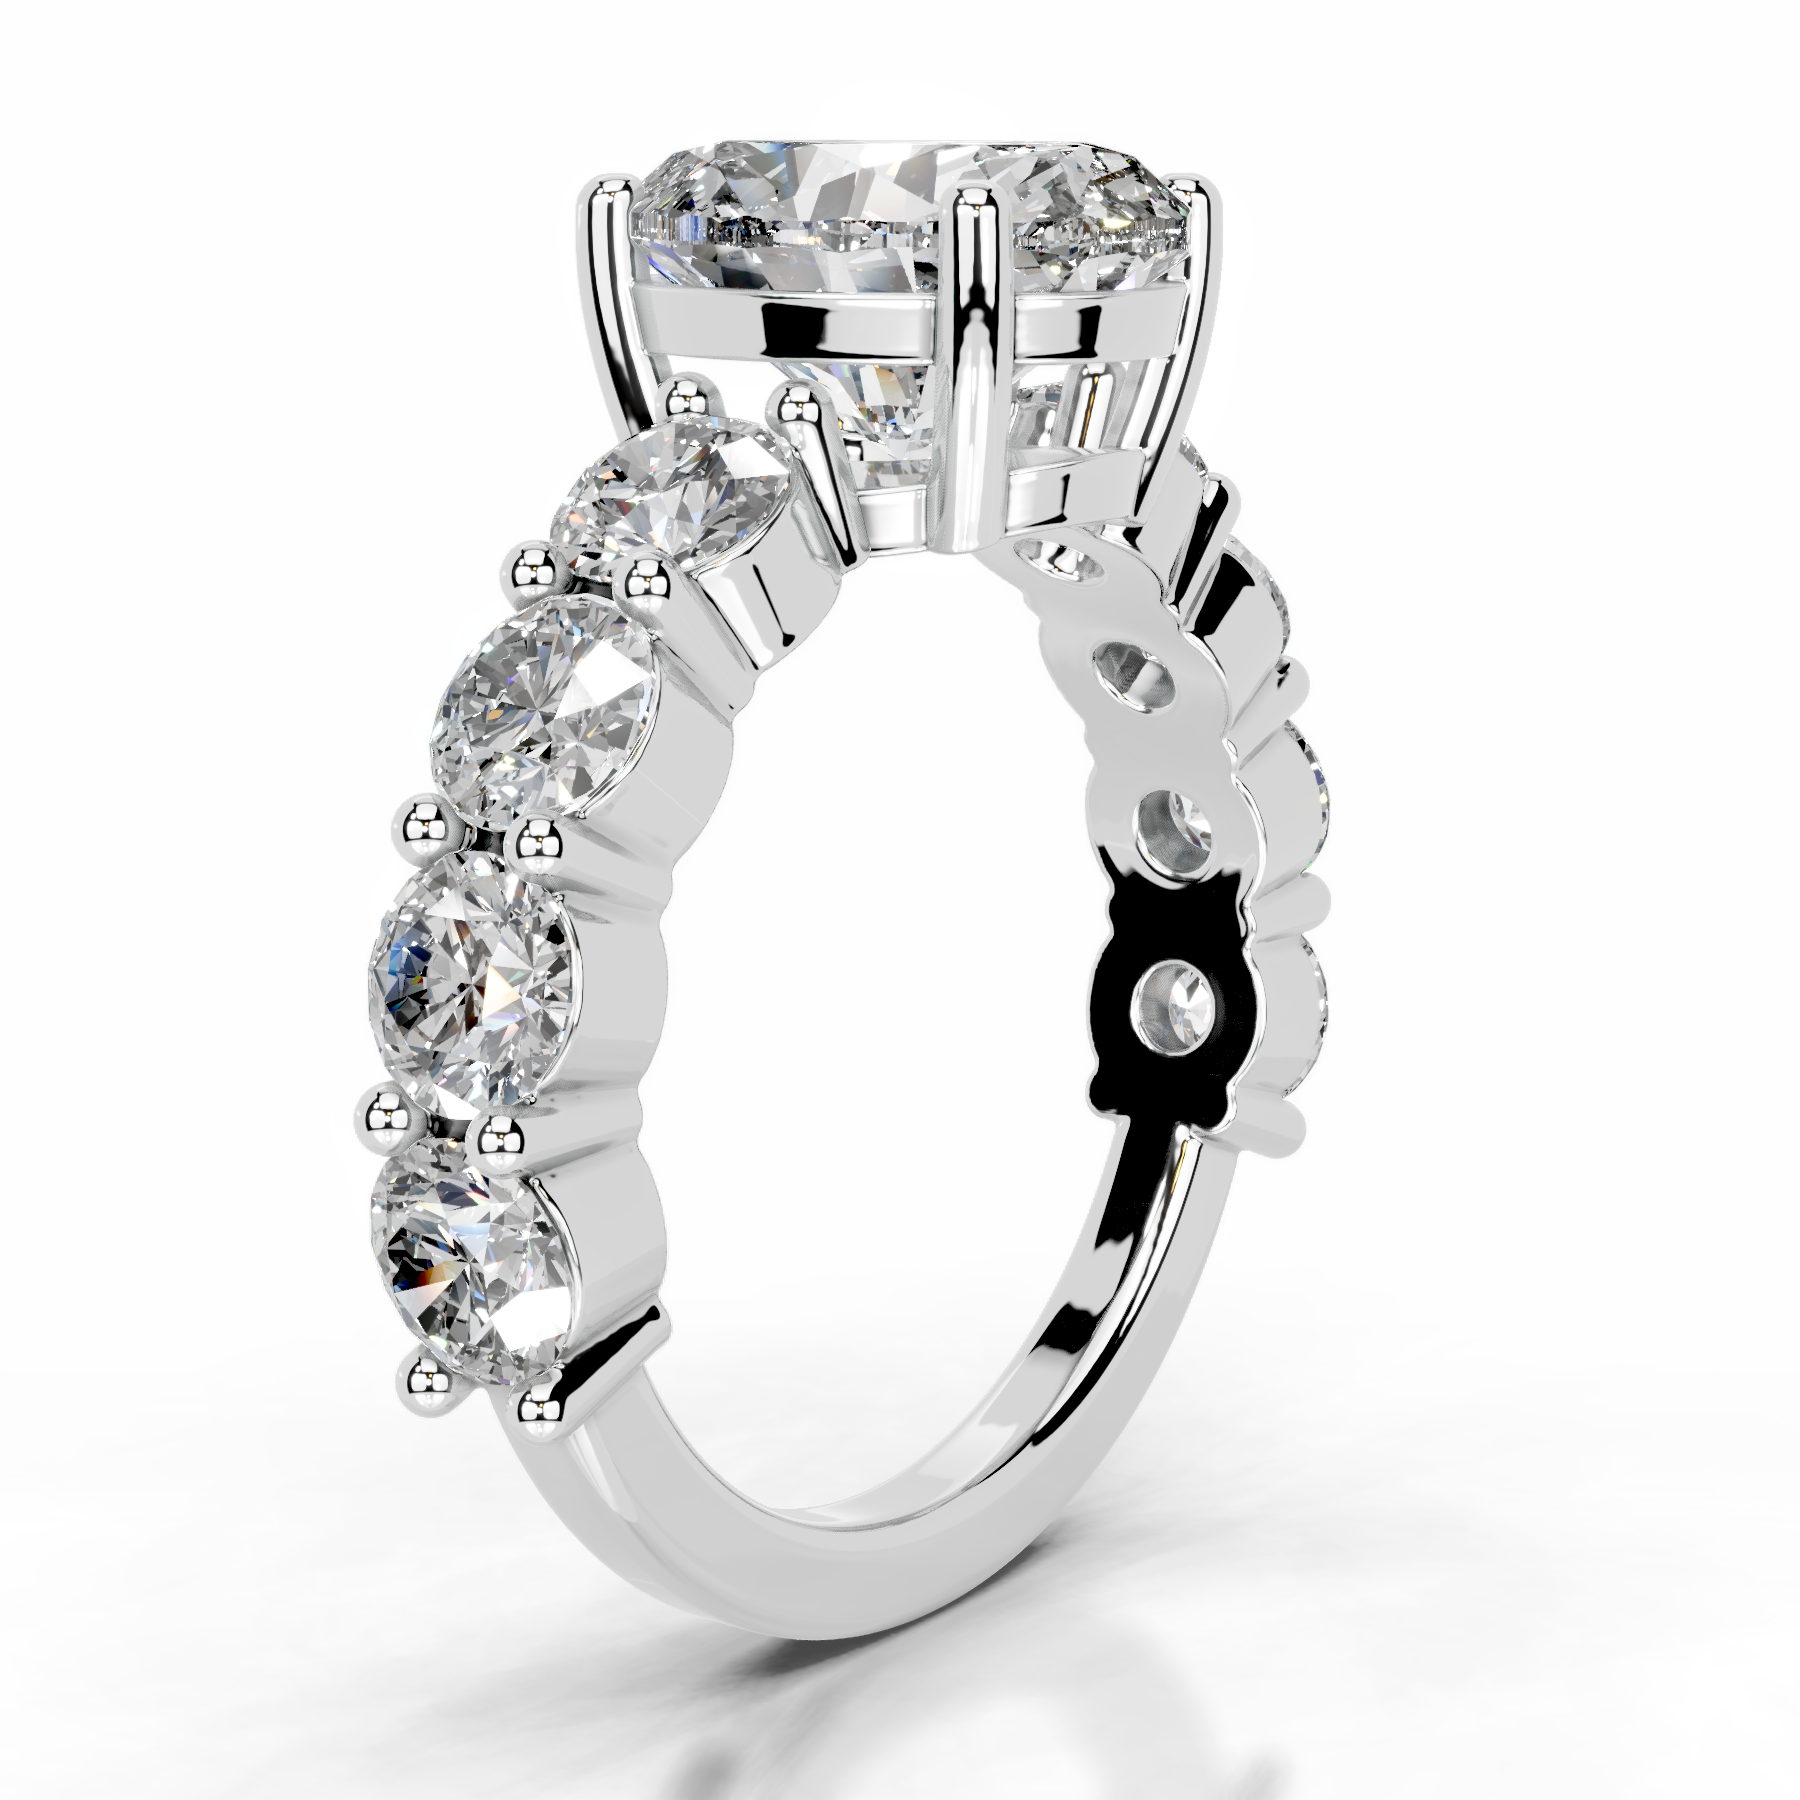 Odin Diamond Engagement Ring   (4 Carat) -Platinum